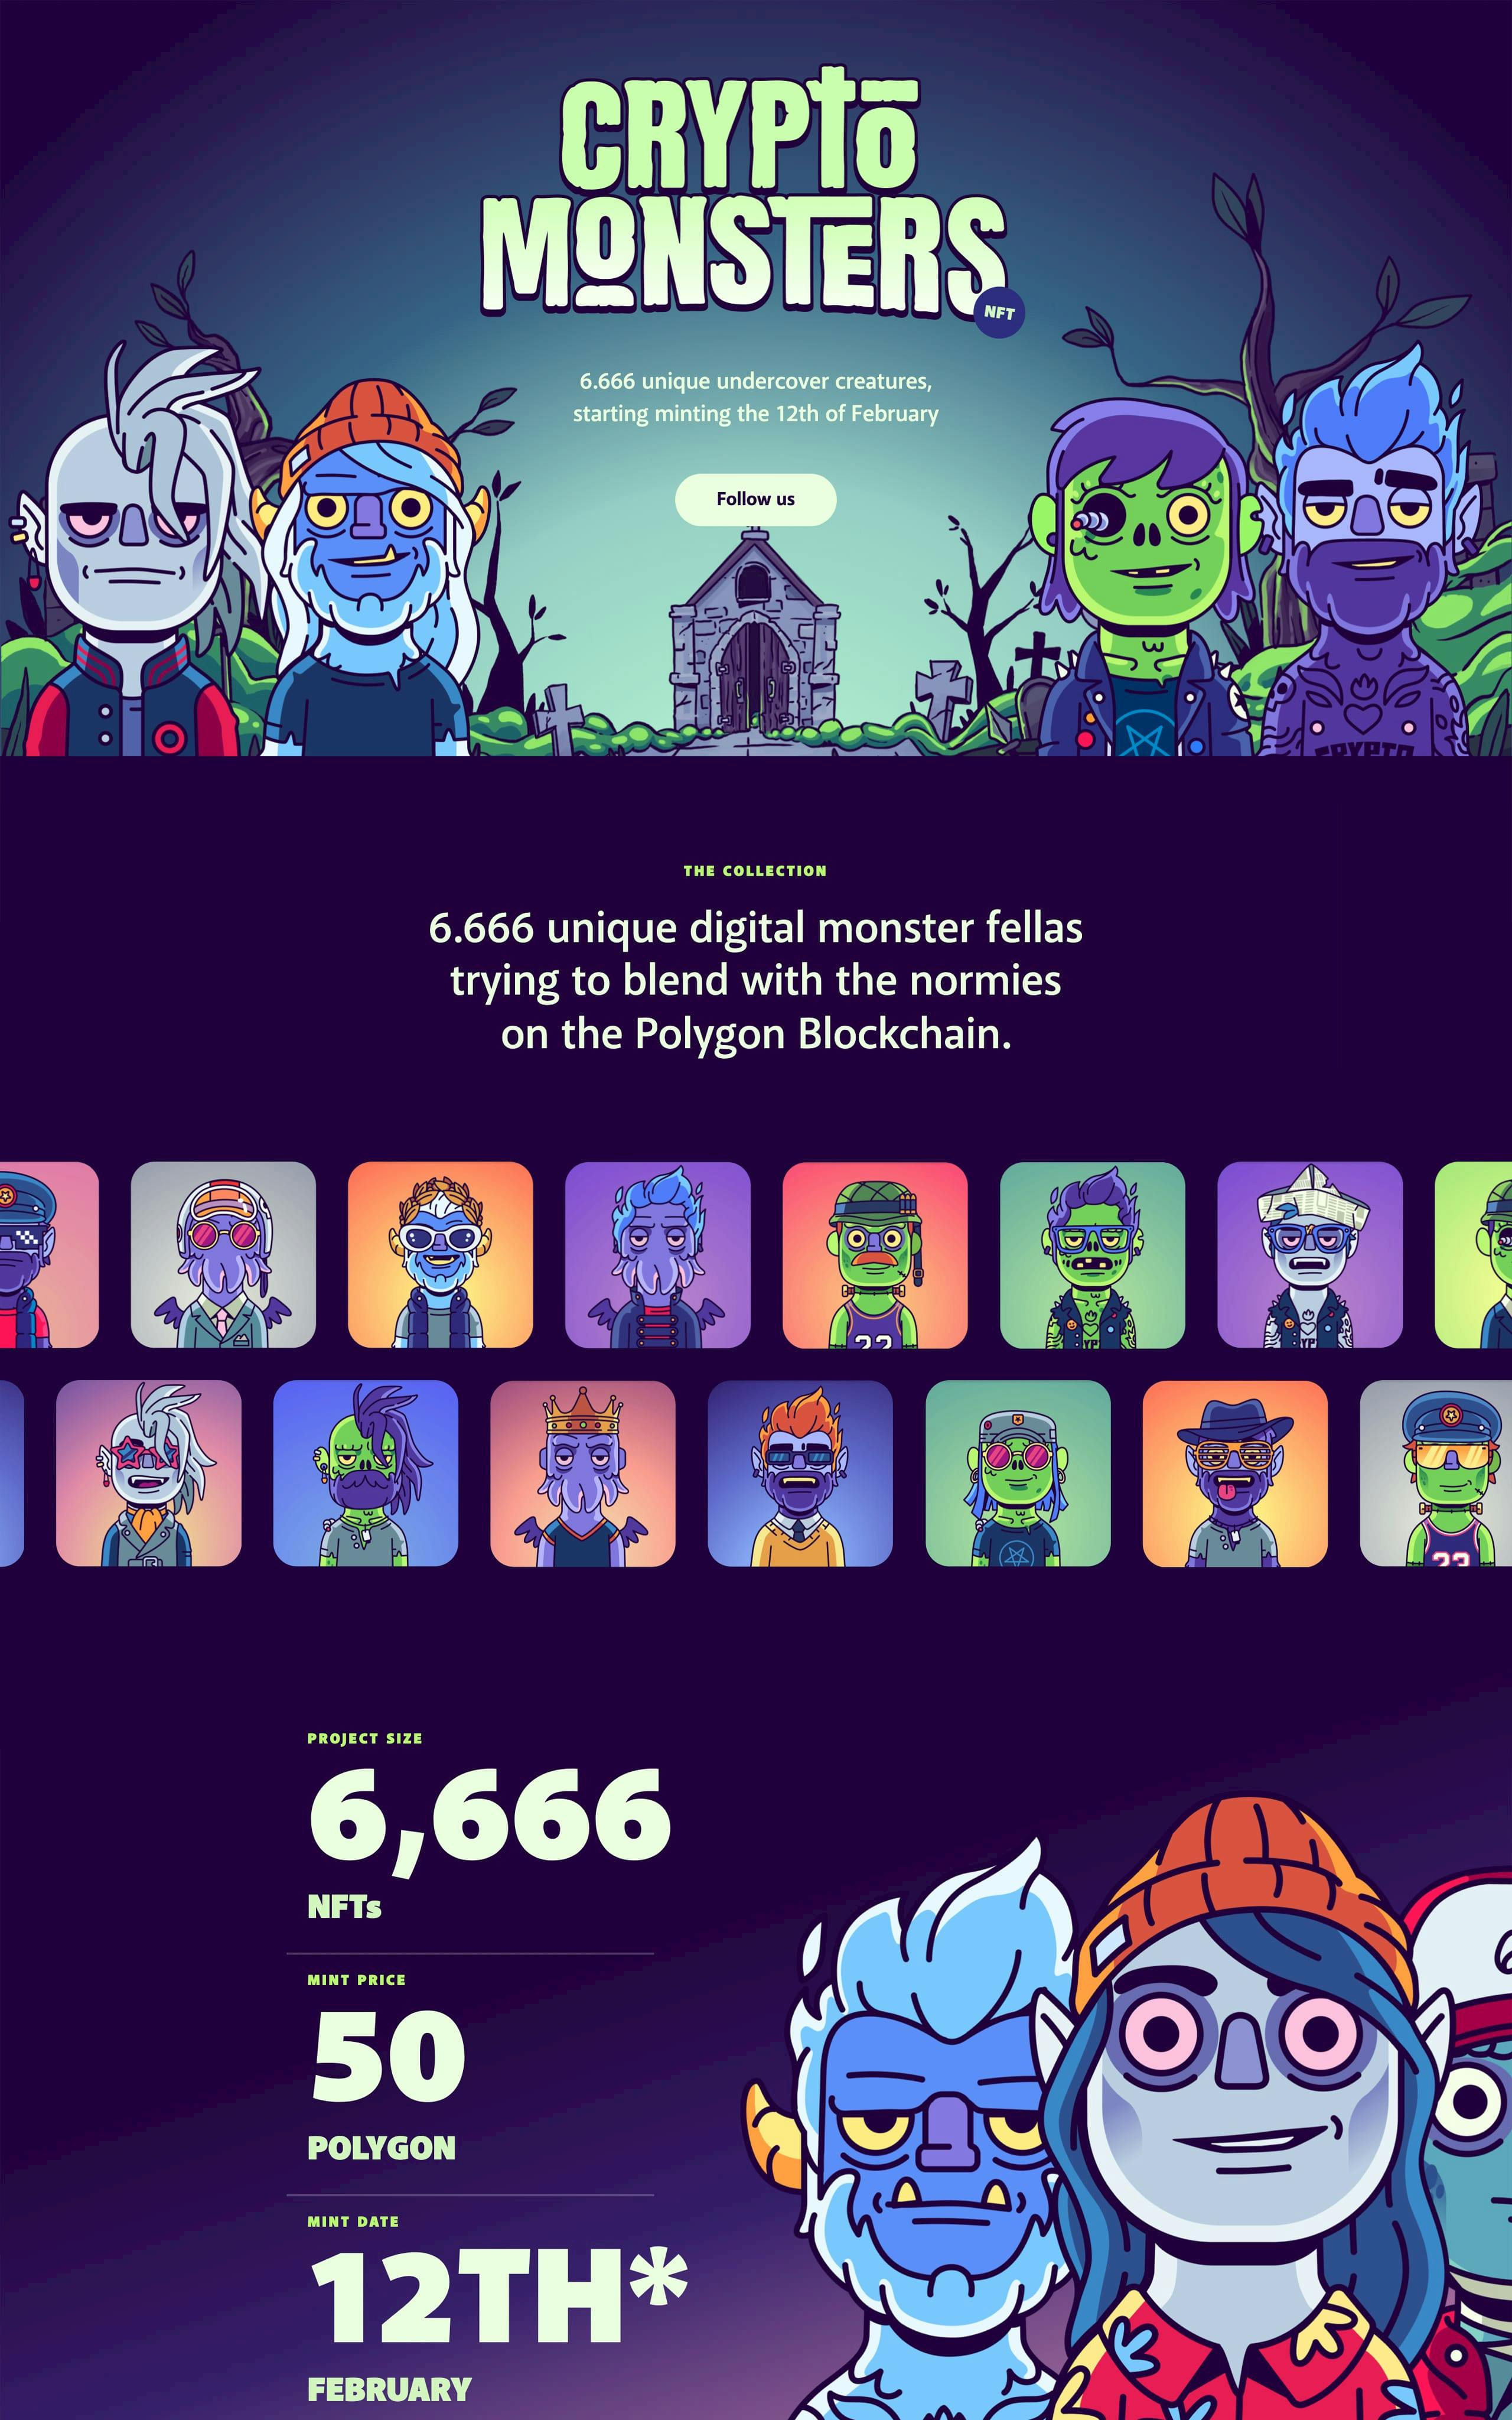 Crypt-o Monsters Website Screenshot